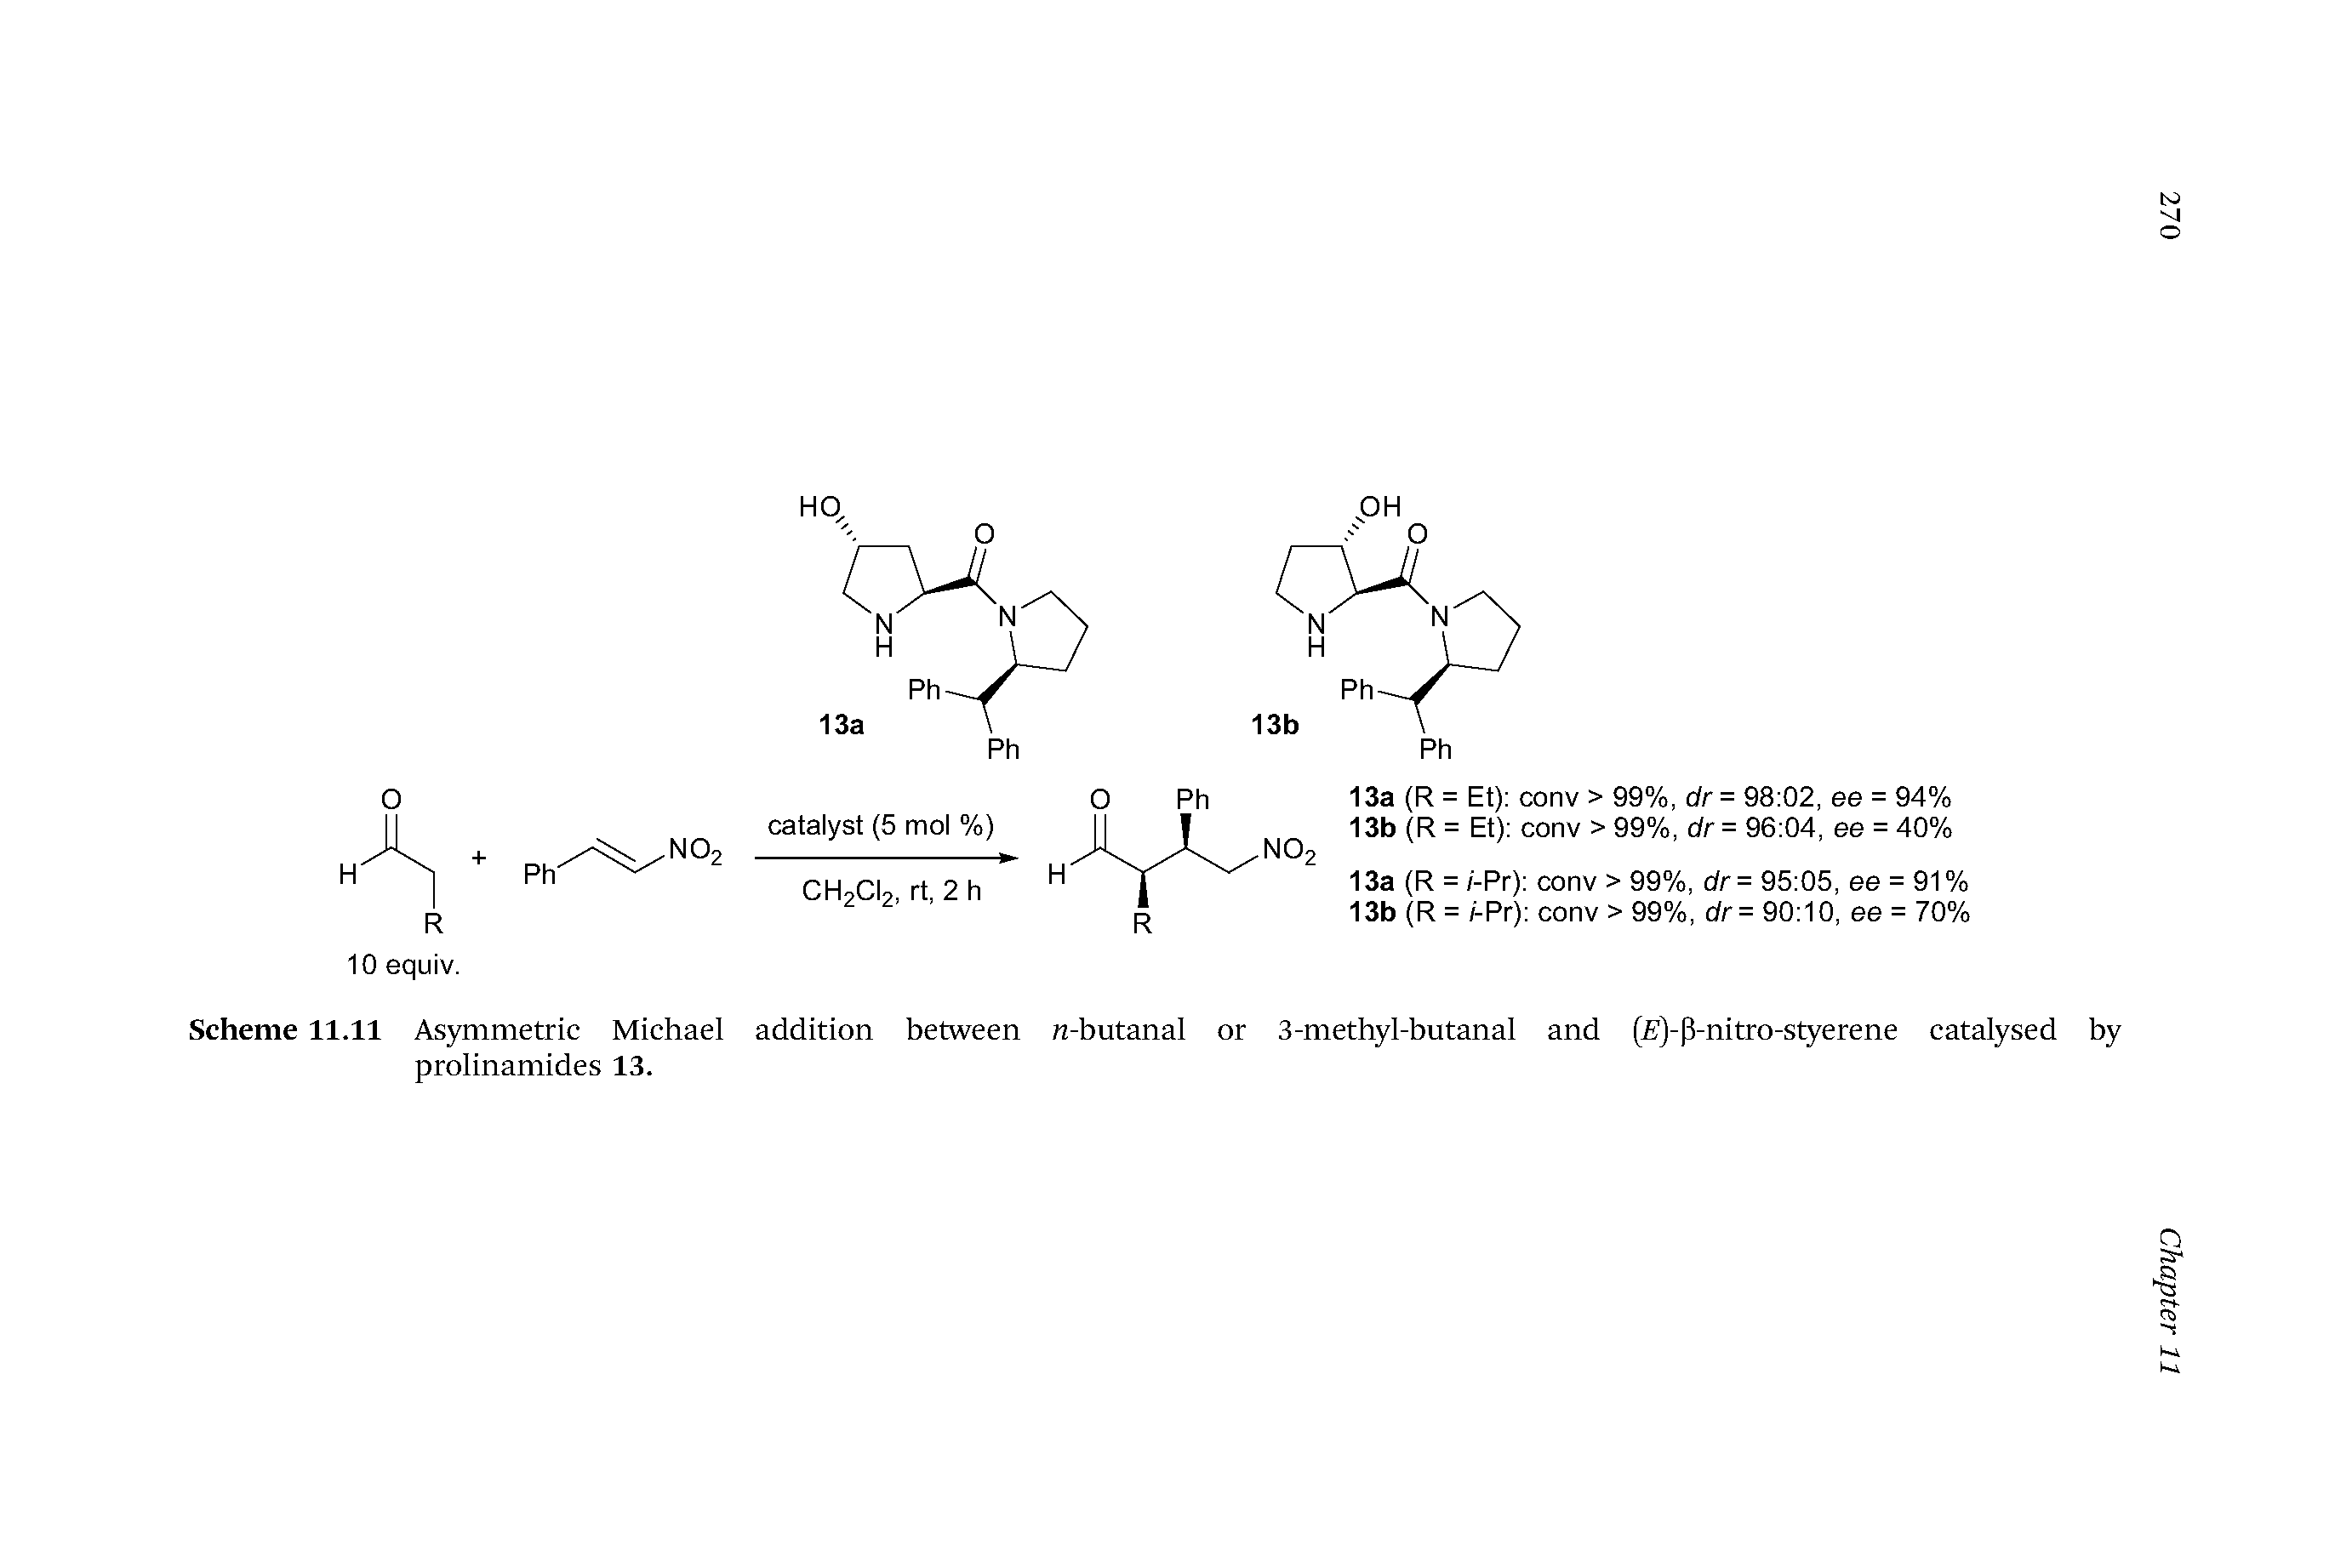 Scheme 11.11 Asymmetric Michael addition between w-butanal or 3-methyl-butanal and (i )-p-nitro-styerene catalysed by prolinamides 13.